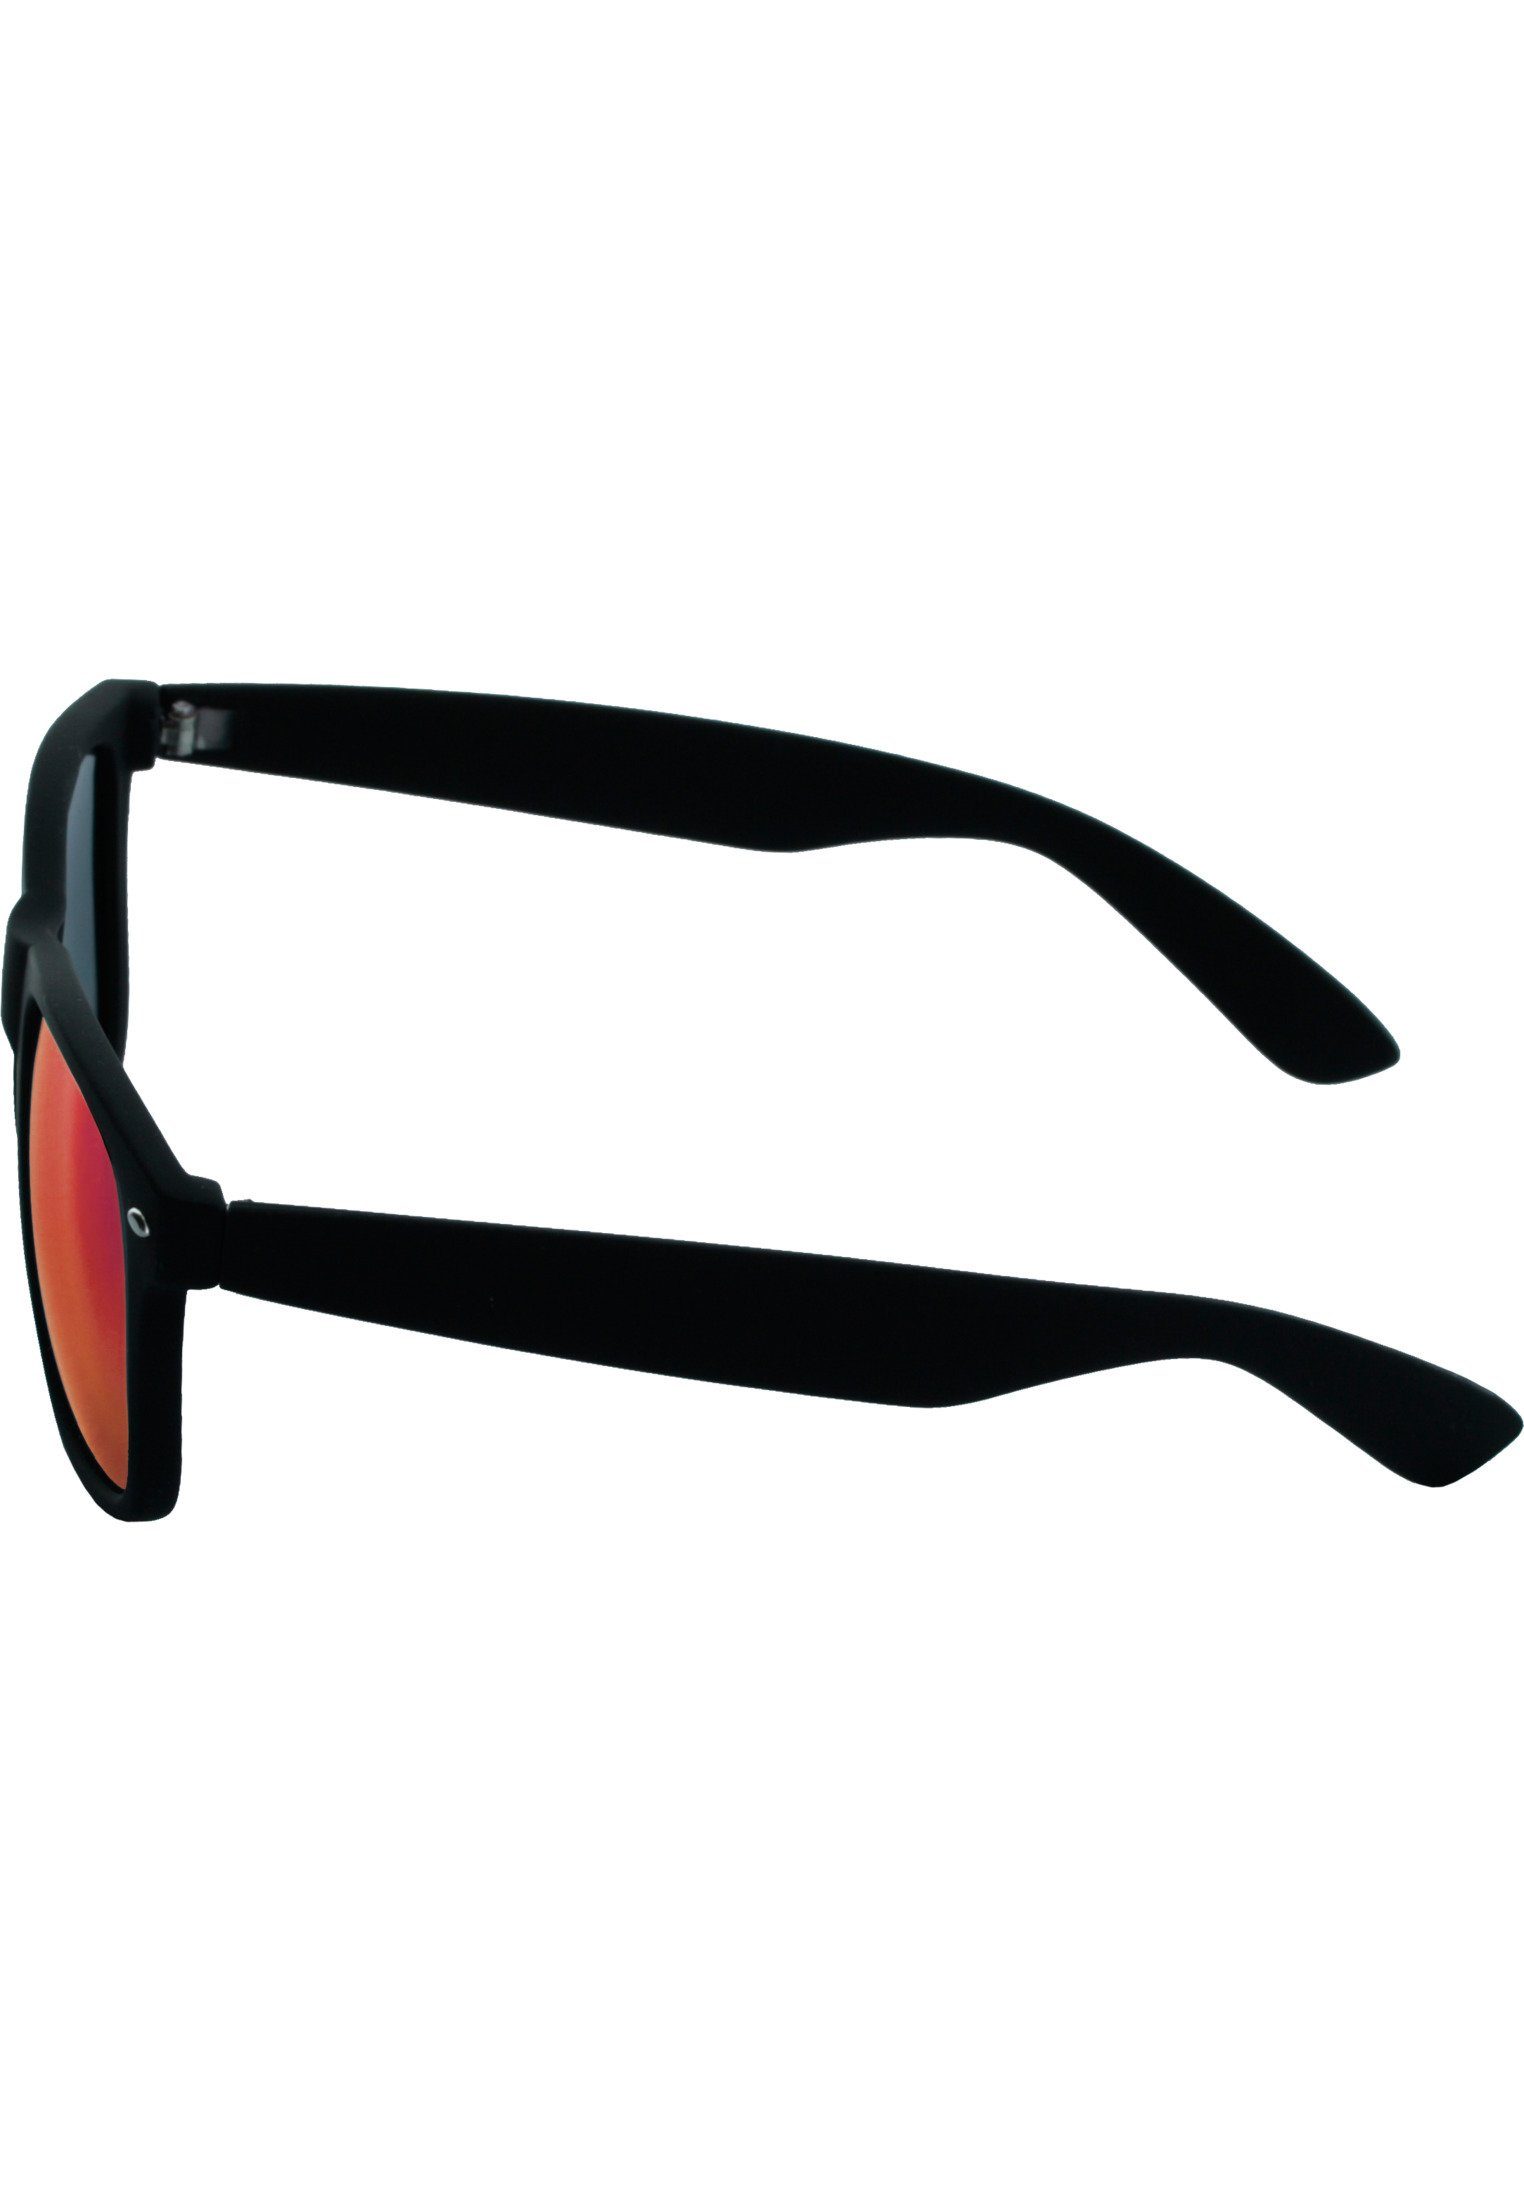 MSTRDS Sonnenbrille Accessoires Sunglasses blk/red Mirror Likoma